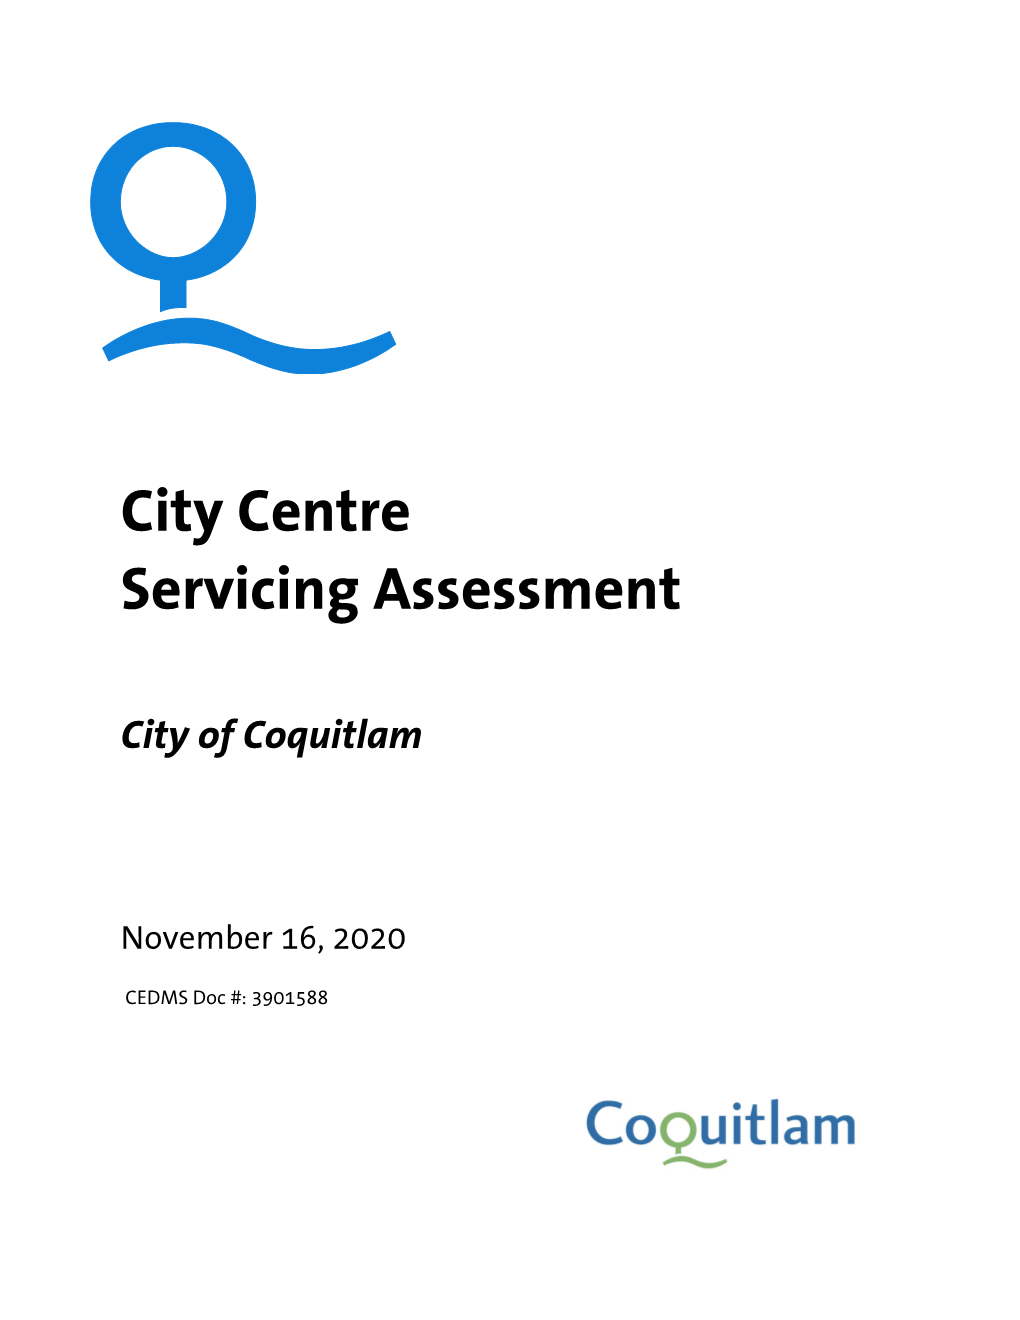 City Centre Servicing Assessment